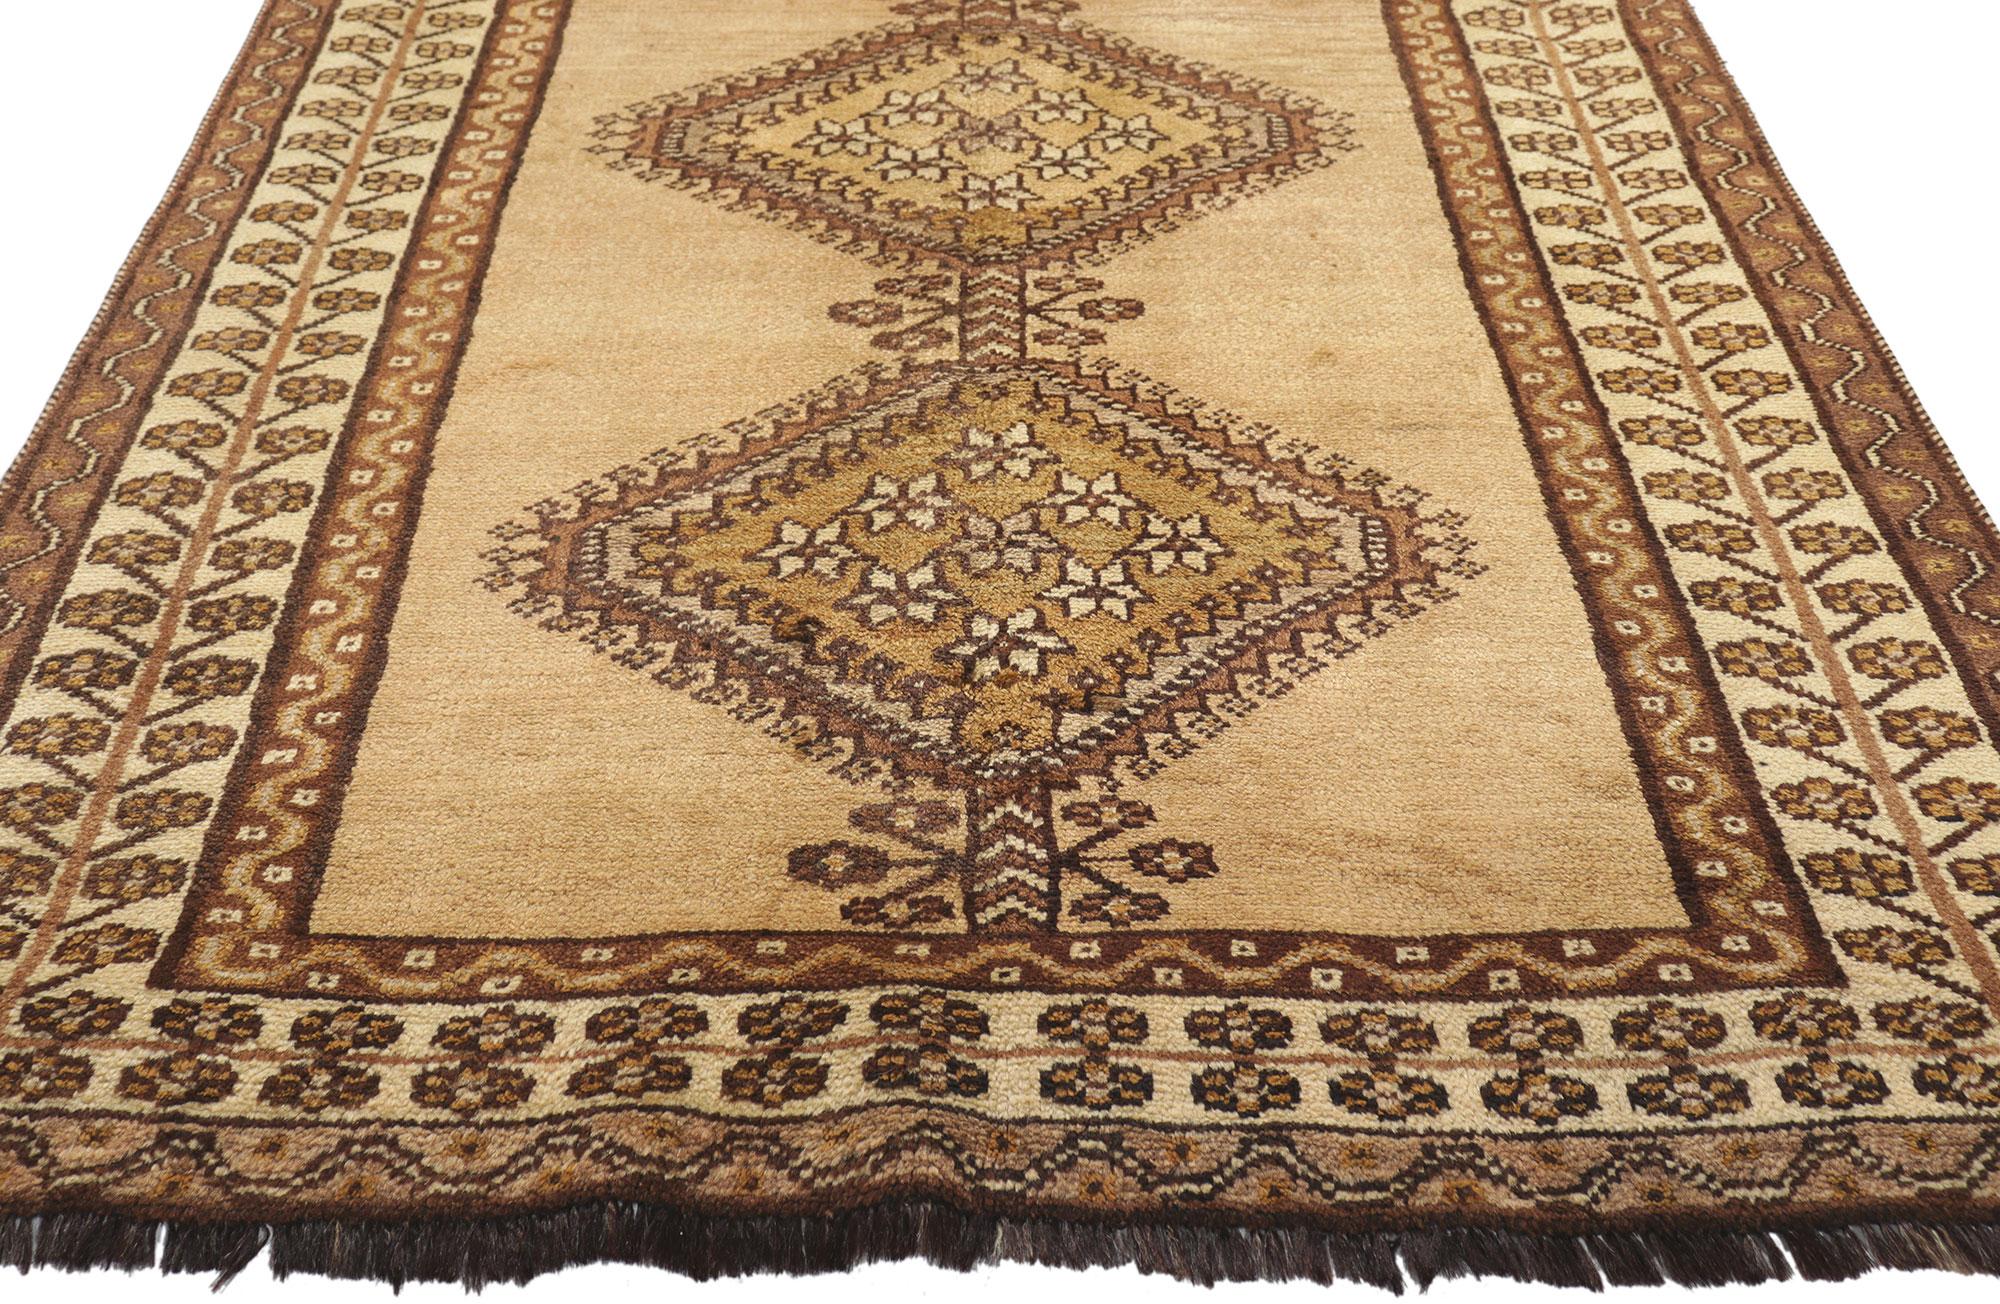 Earth-Tone Vintage Persian Shiraz Tribal Rug In Good Condition For Sale In Dallas, TX